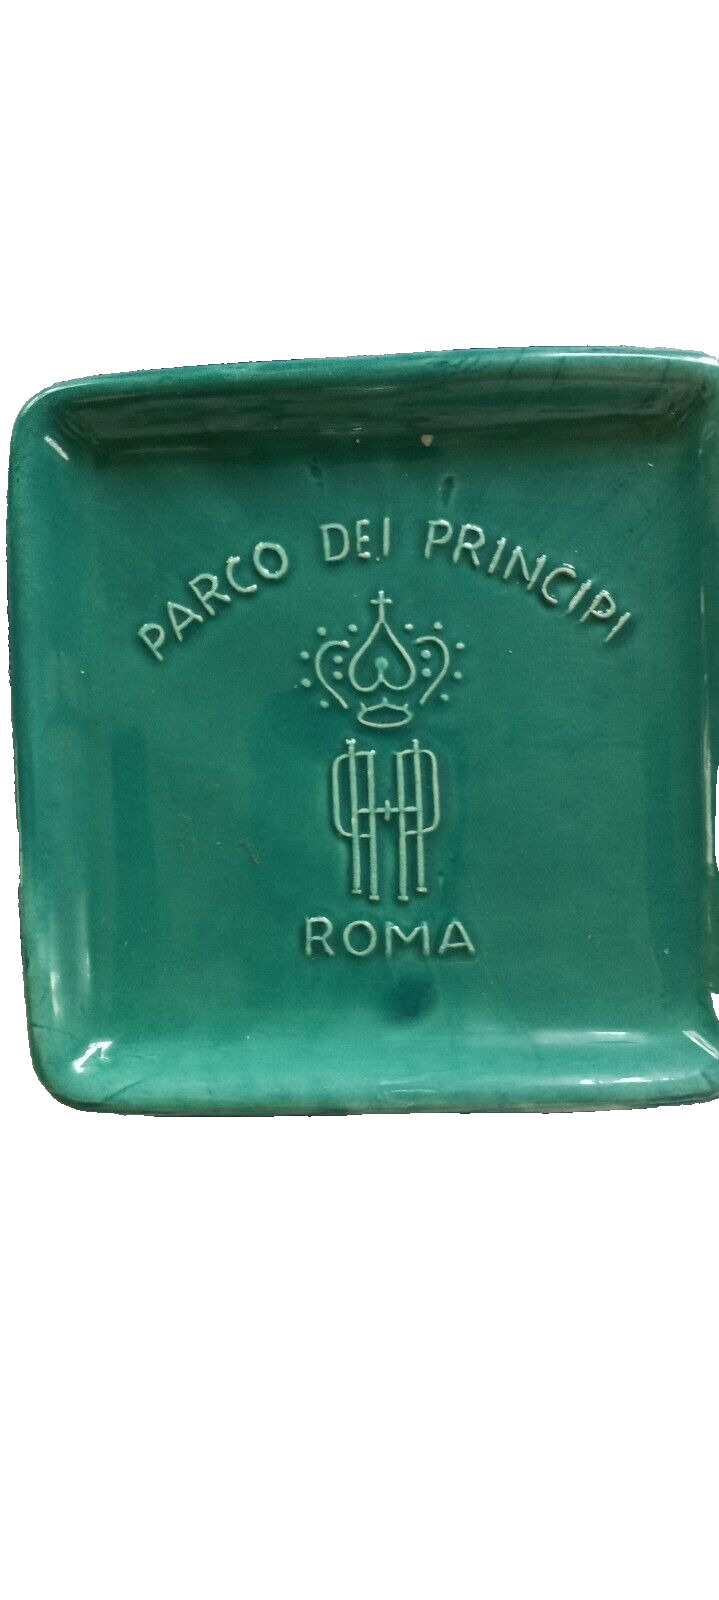 Vintage 5-Star Parco Dei Principi Rome Hotel Ashtray Italy Green Ceramic